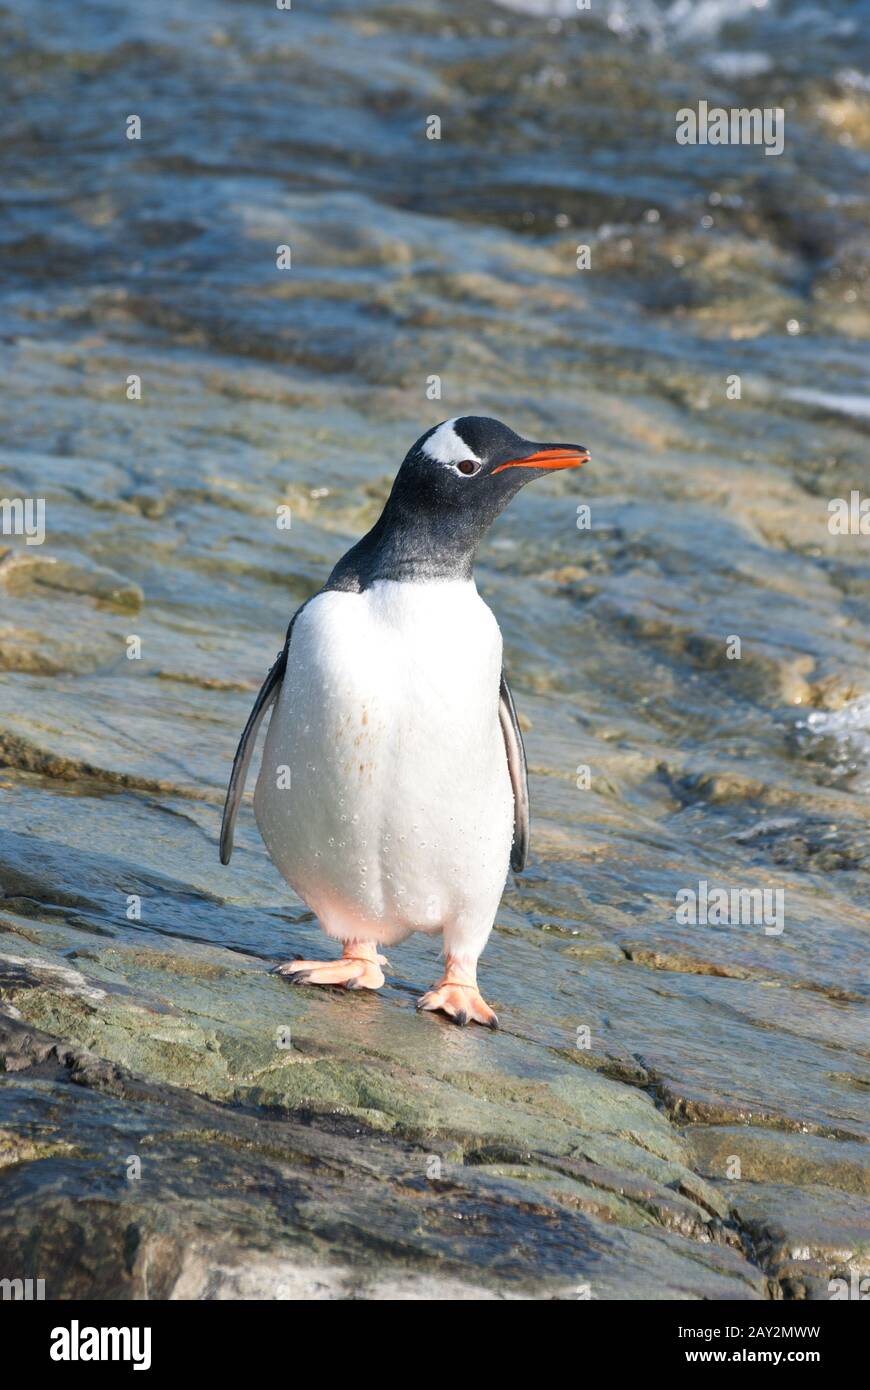 Gentoo penguin standing in the tidal zone. Stock Photo